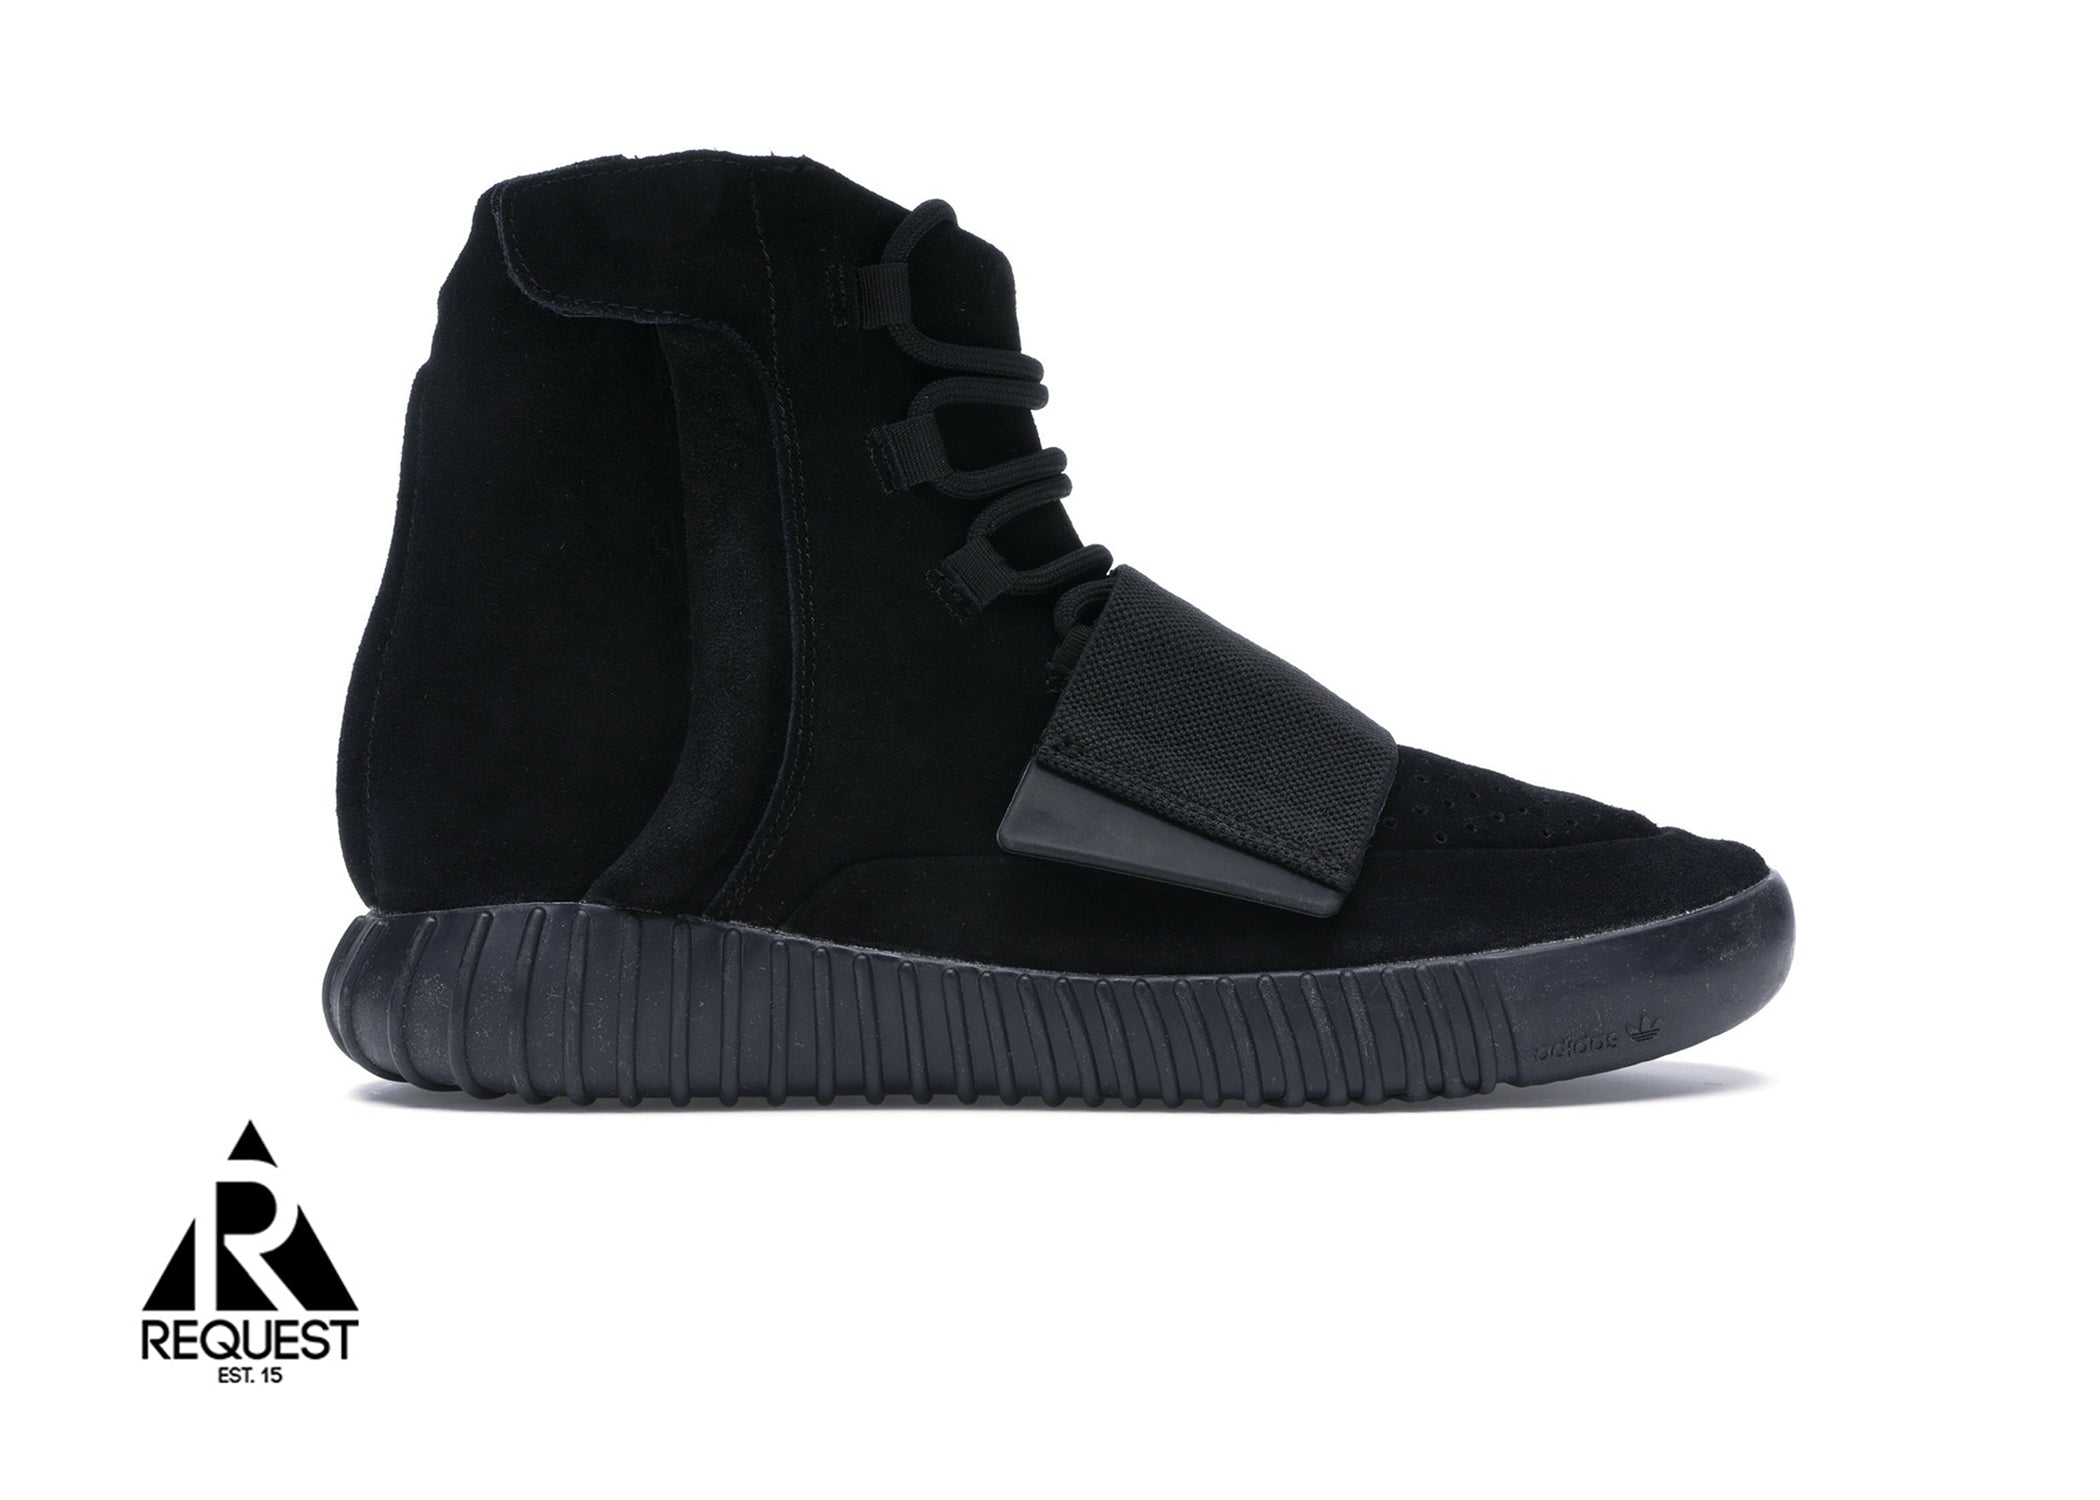 Adidas Yeezy Boost 750 “Triple Black”